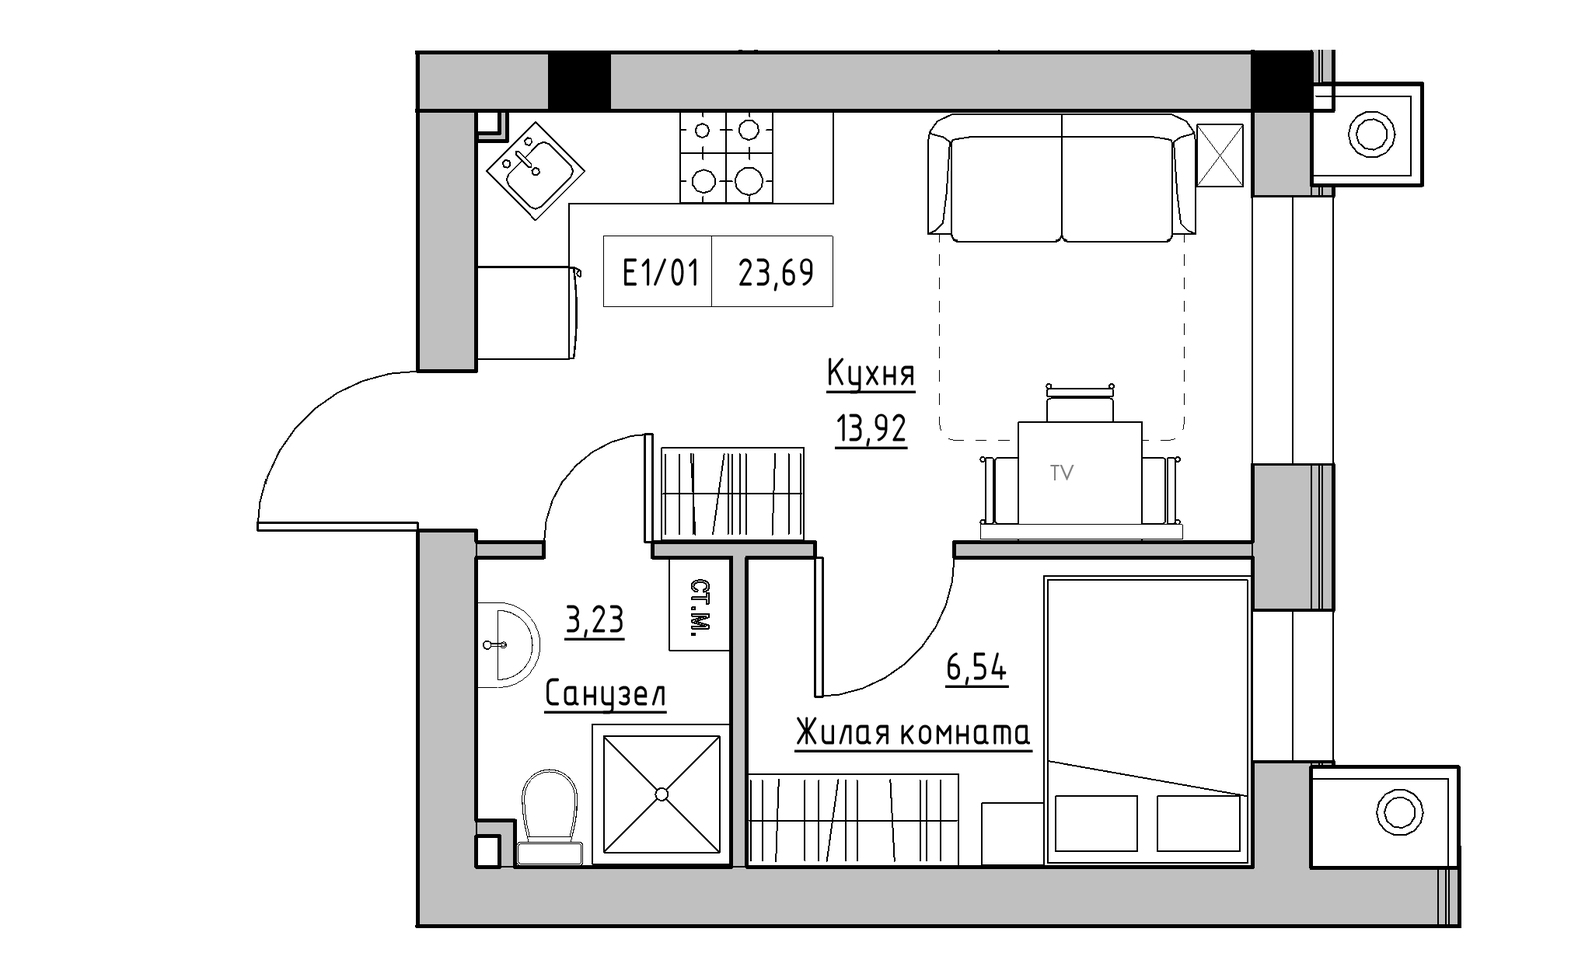 Planning 1-rm flats area 23.69m2, KS-014-01/0009.